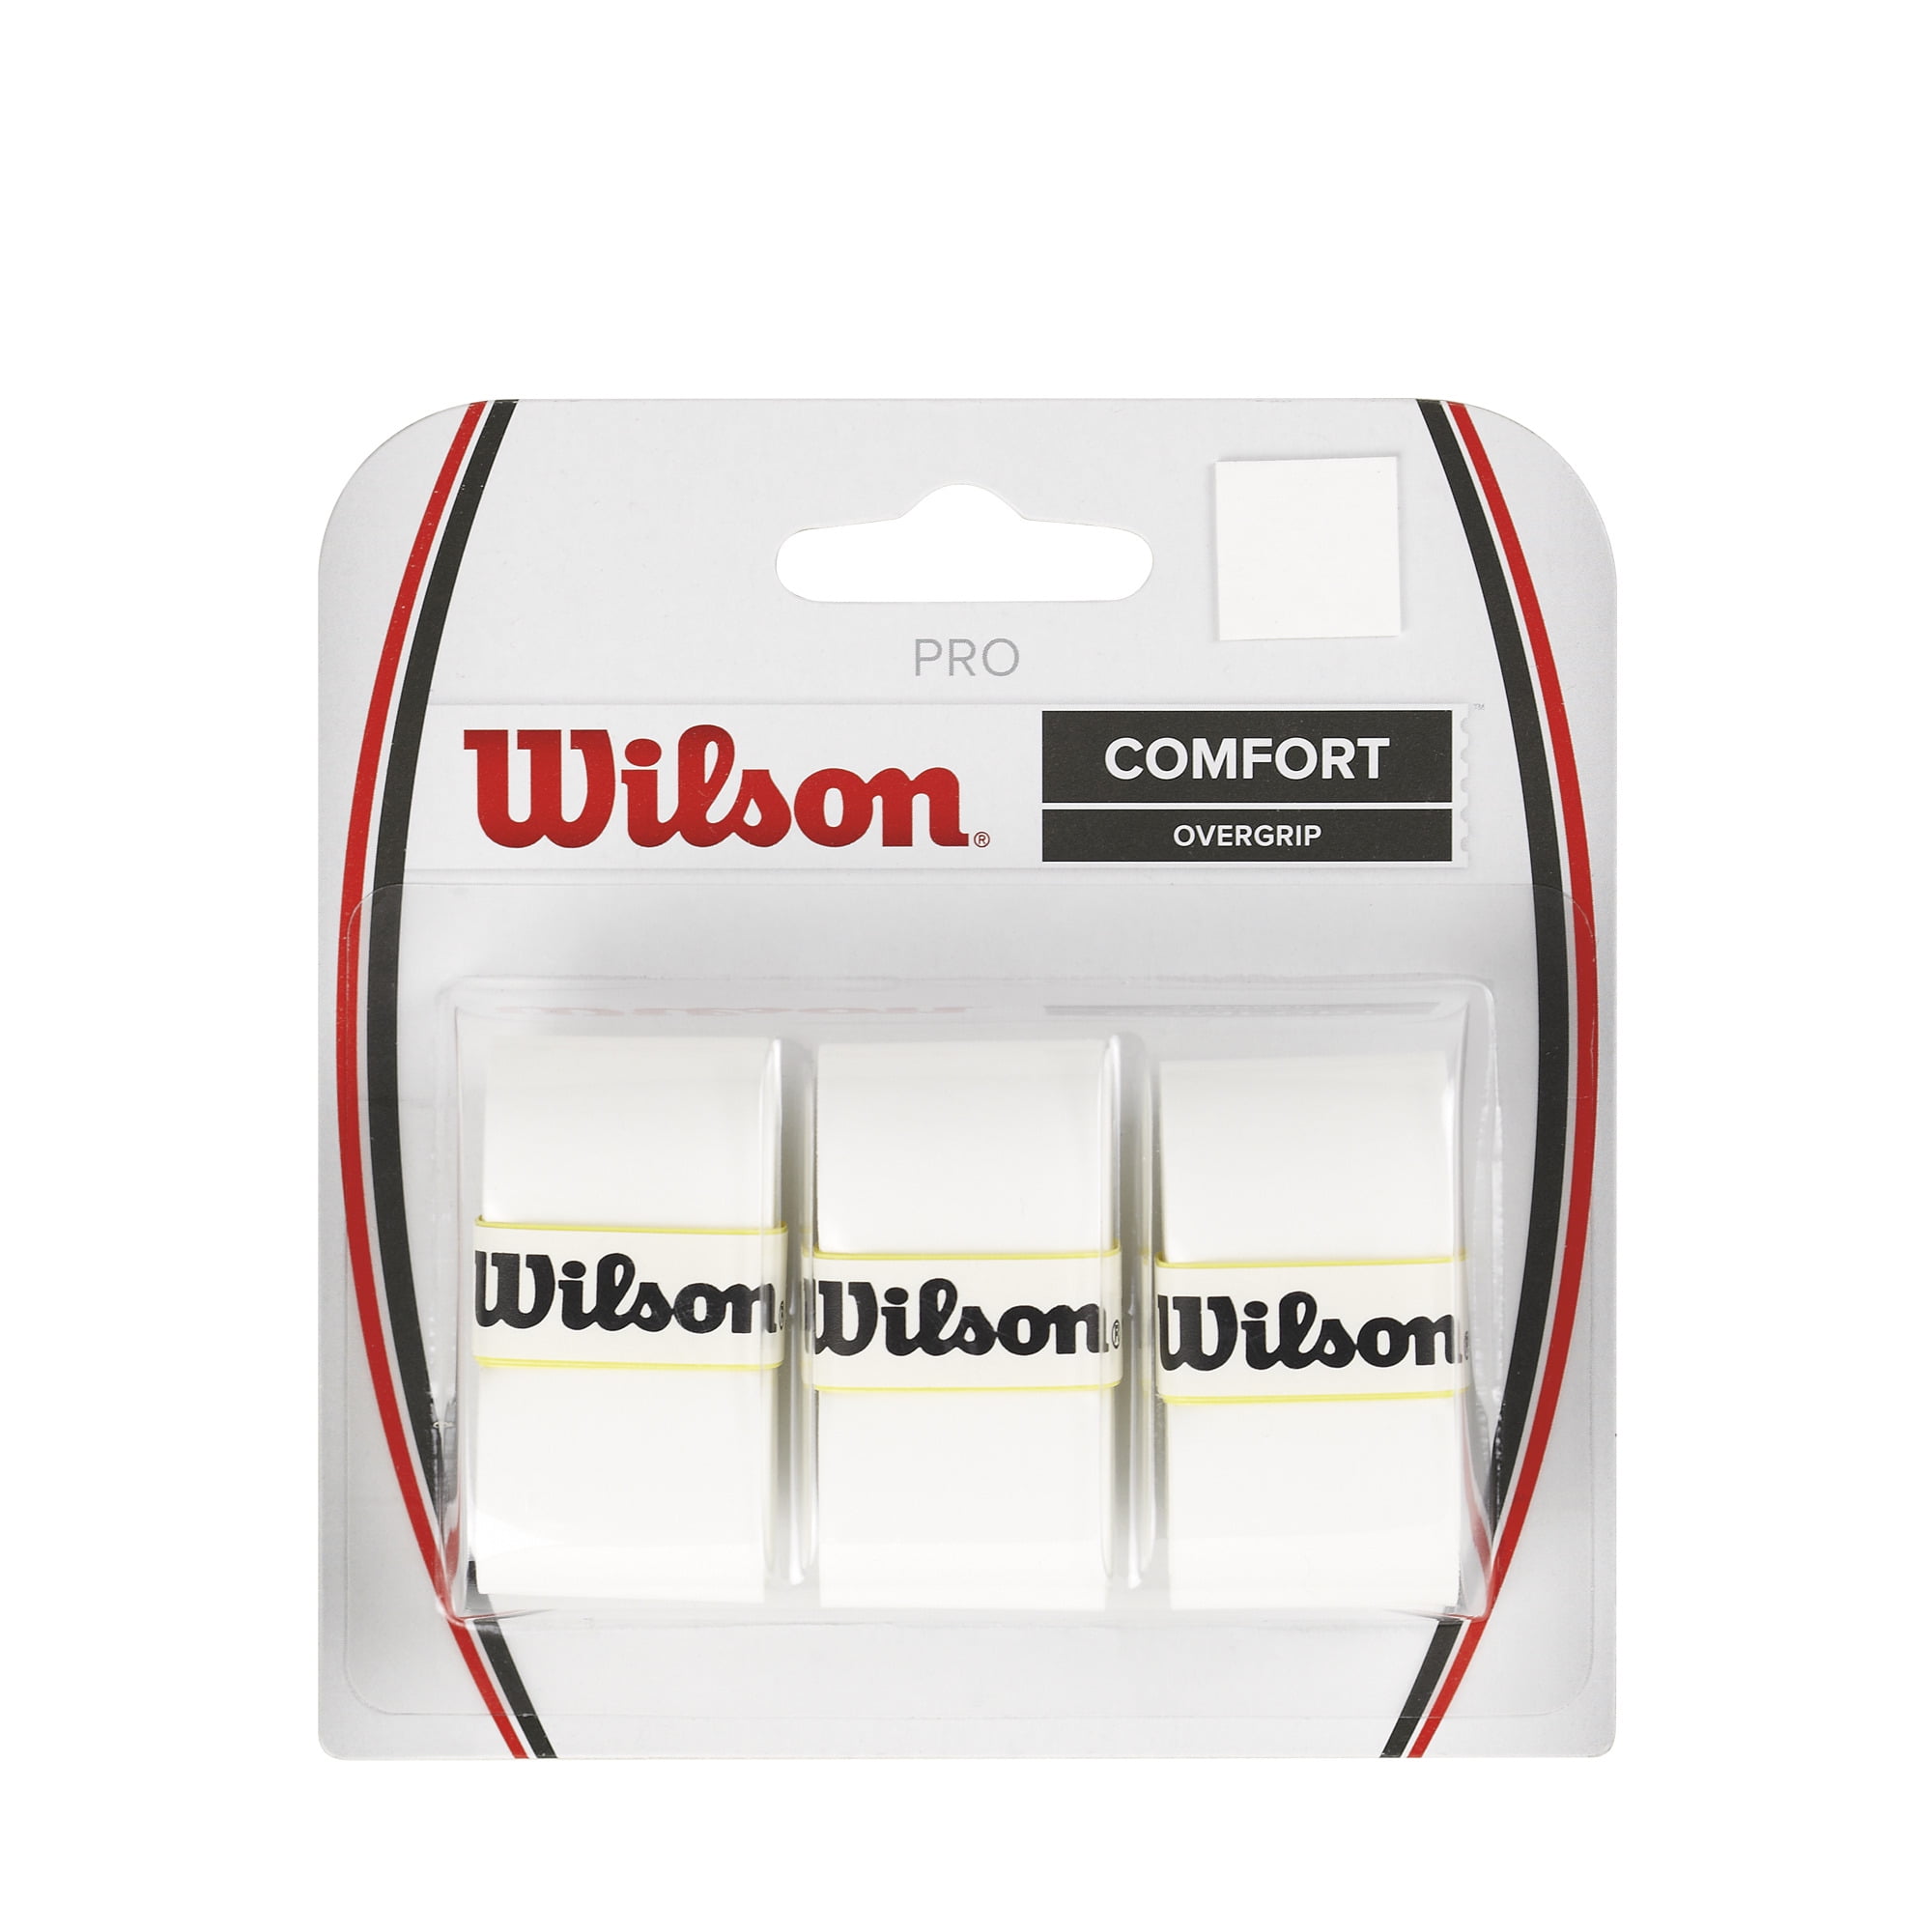 Wilson Tennis Pro Overgrip 60 Pack Mixed Comfort Racquet Racket Tape WRZ401800 